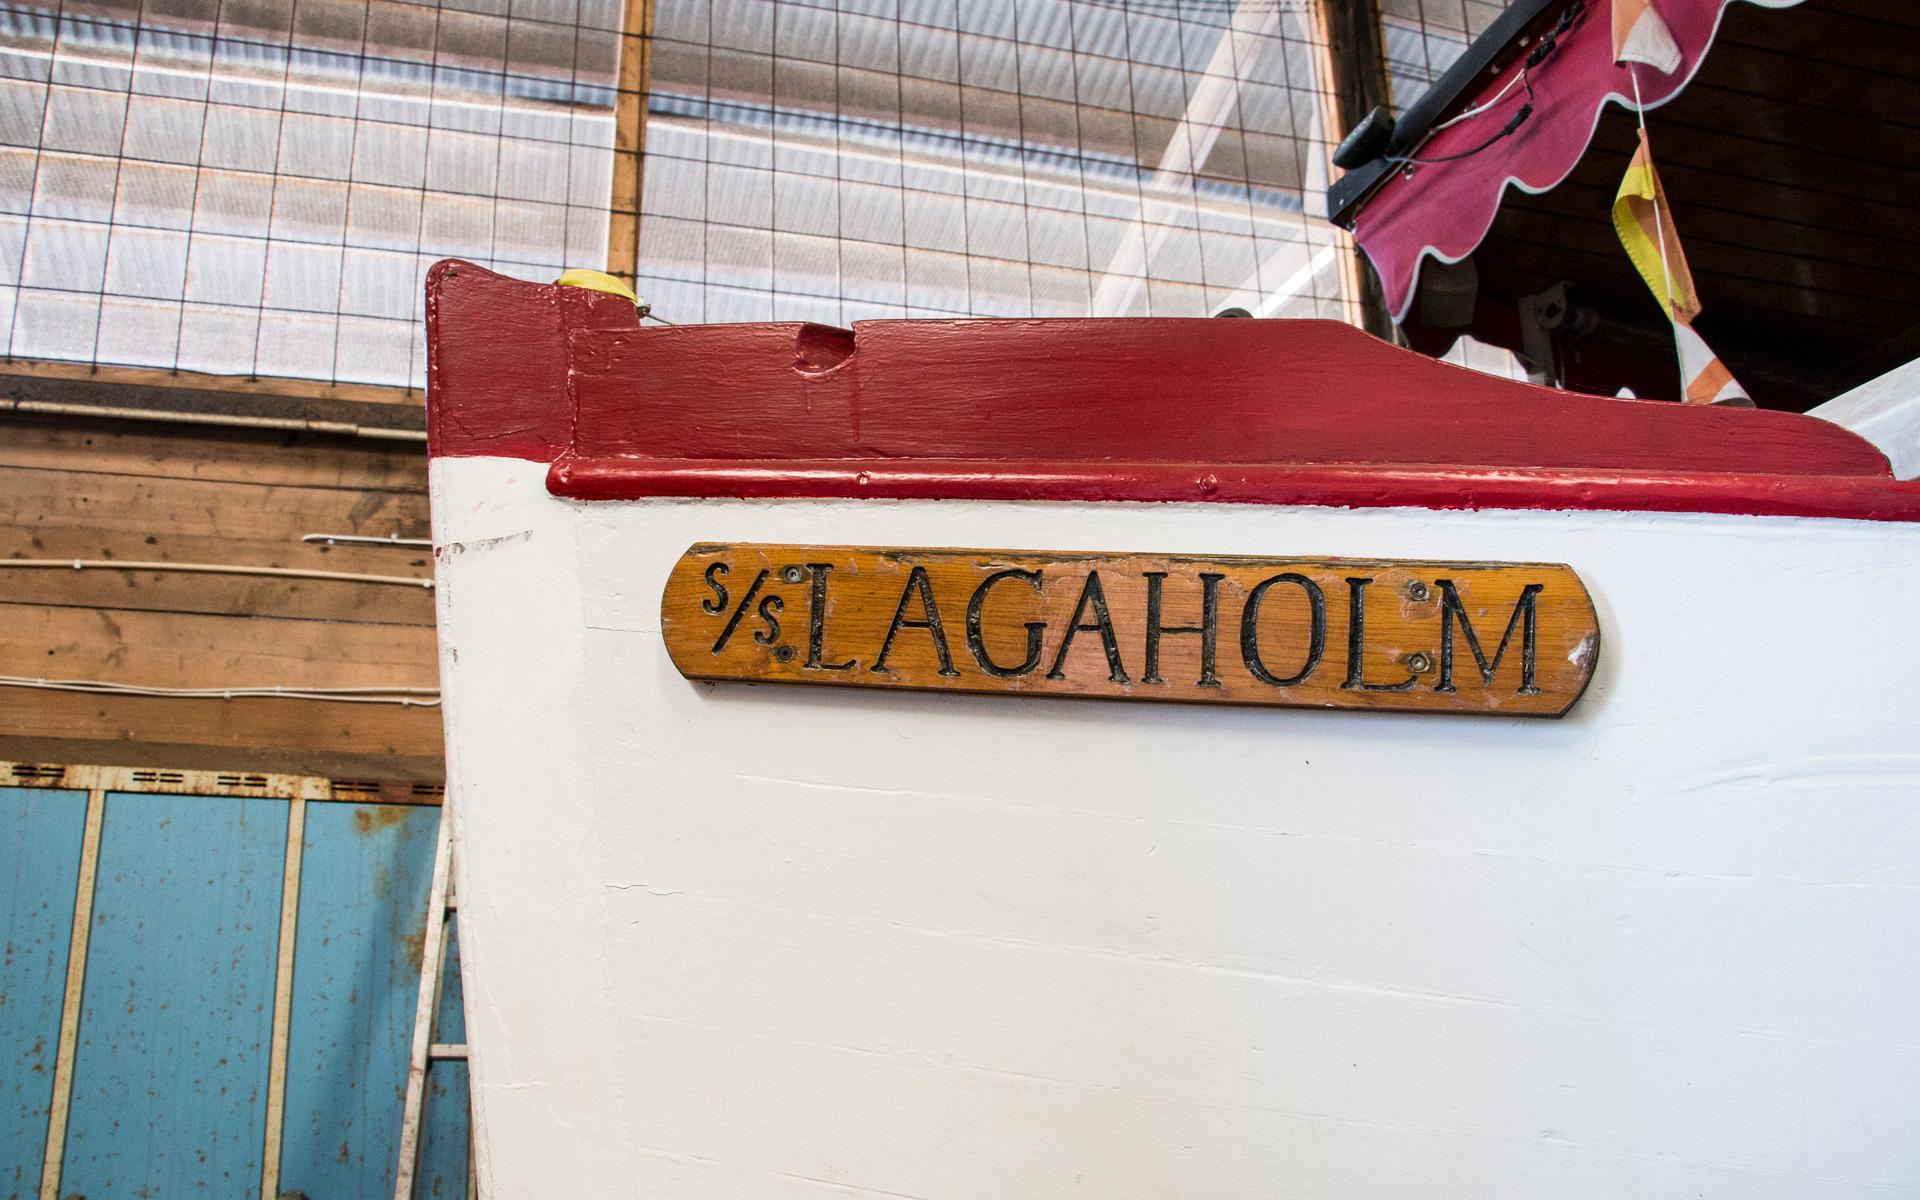 S/S Lagaholm har funnits i Laholm sedan 1985. Tidigare hette den S/S Sofiero.